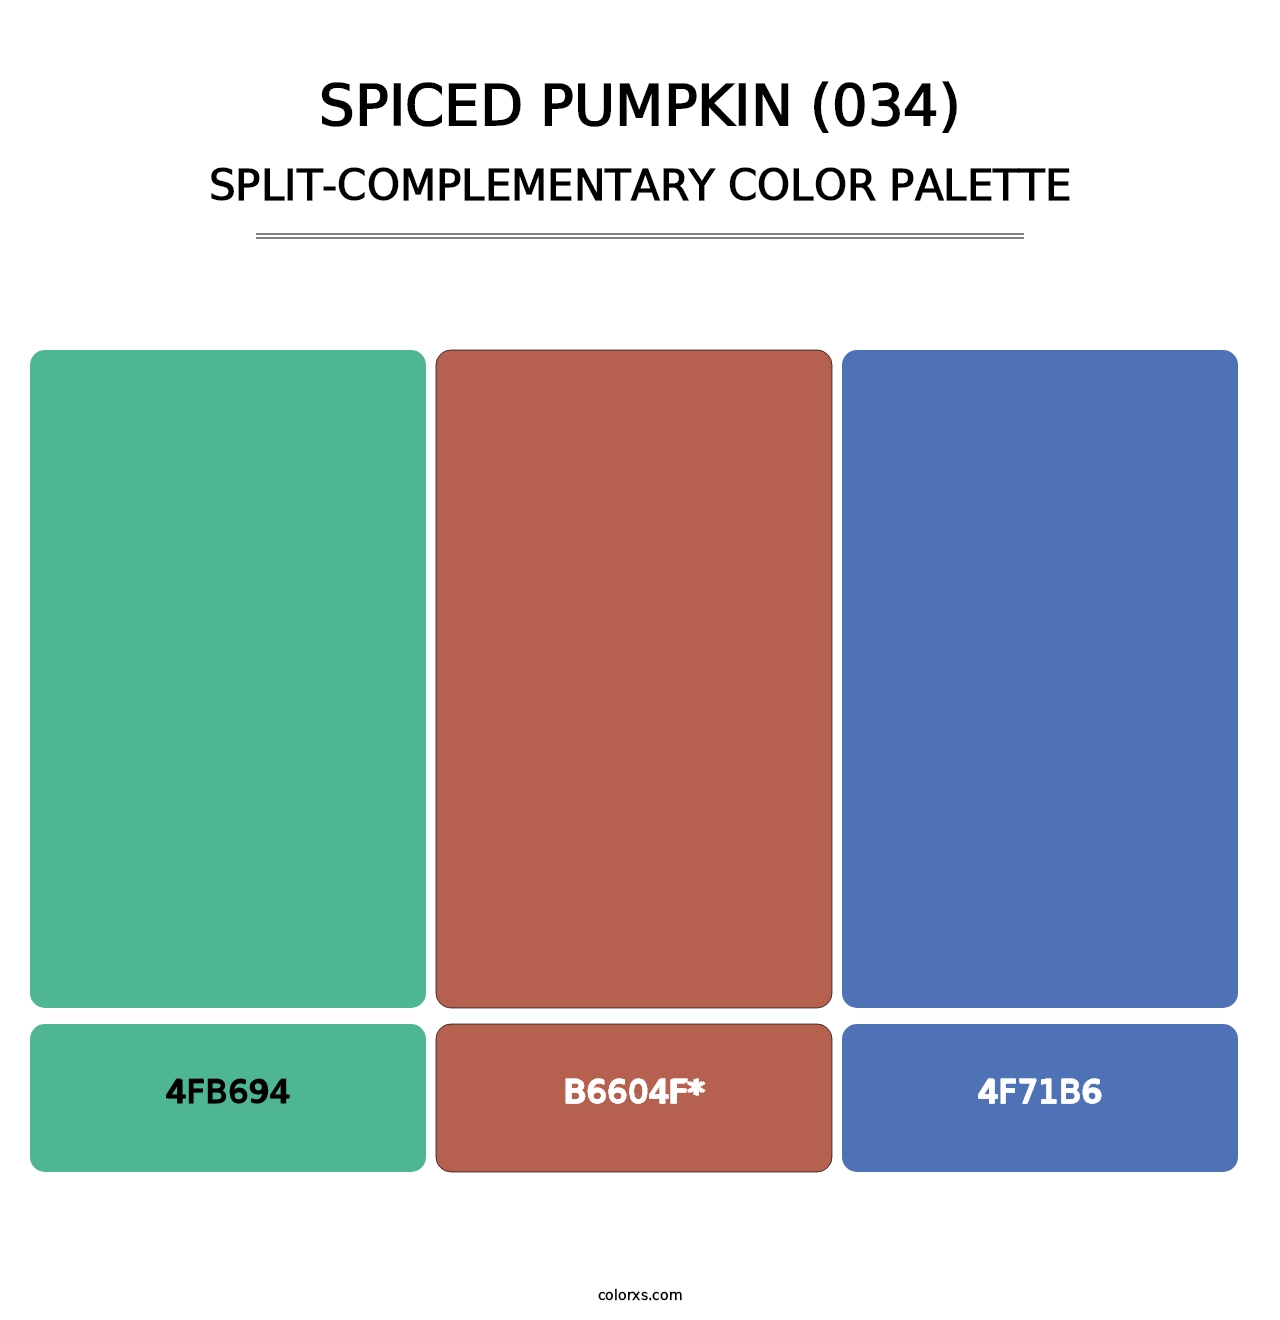 Spiced Pumpkin (034) - Split-Complementary Color Palette